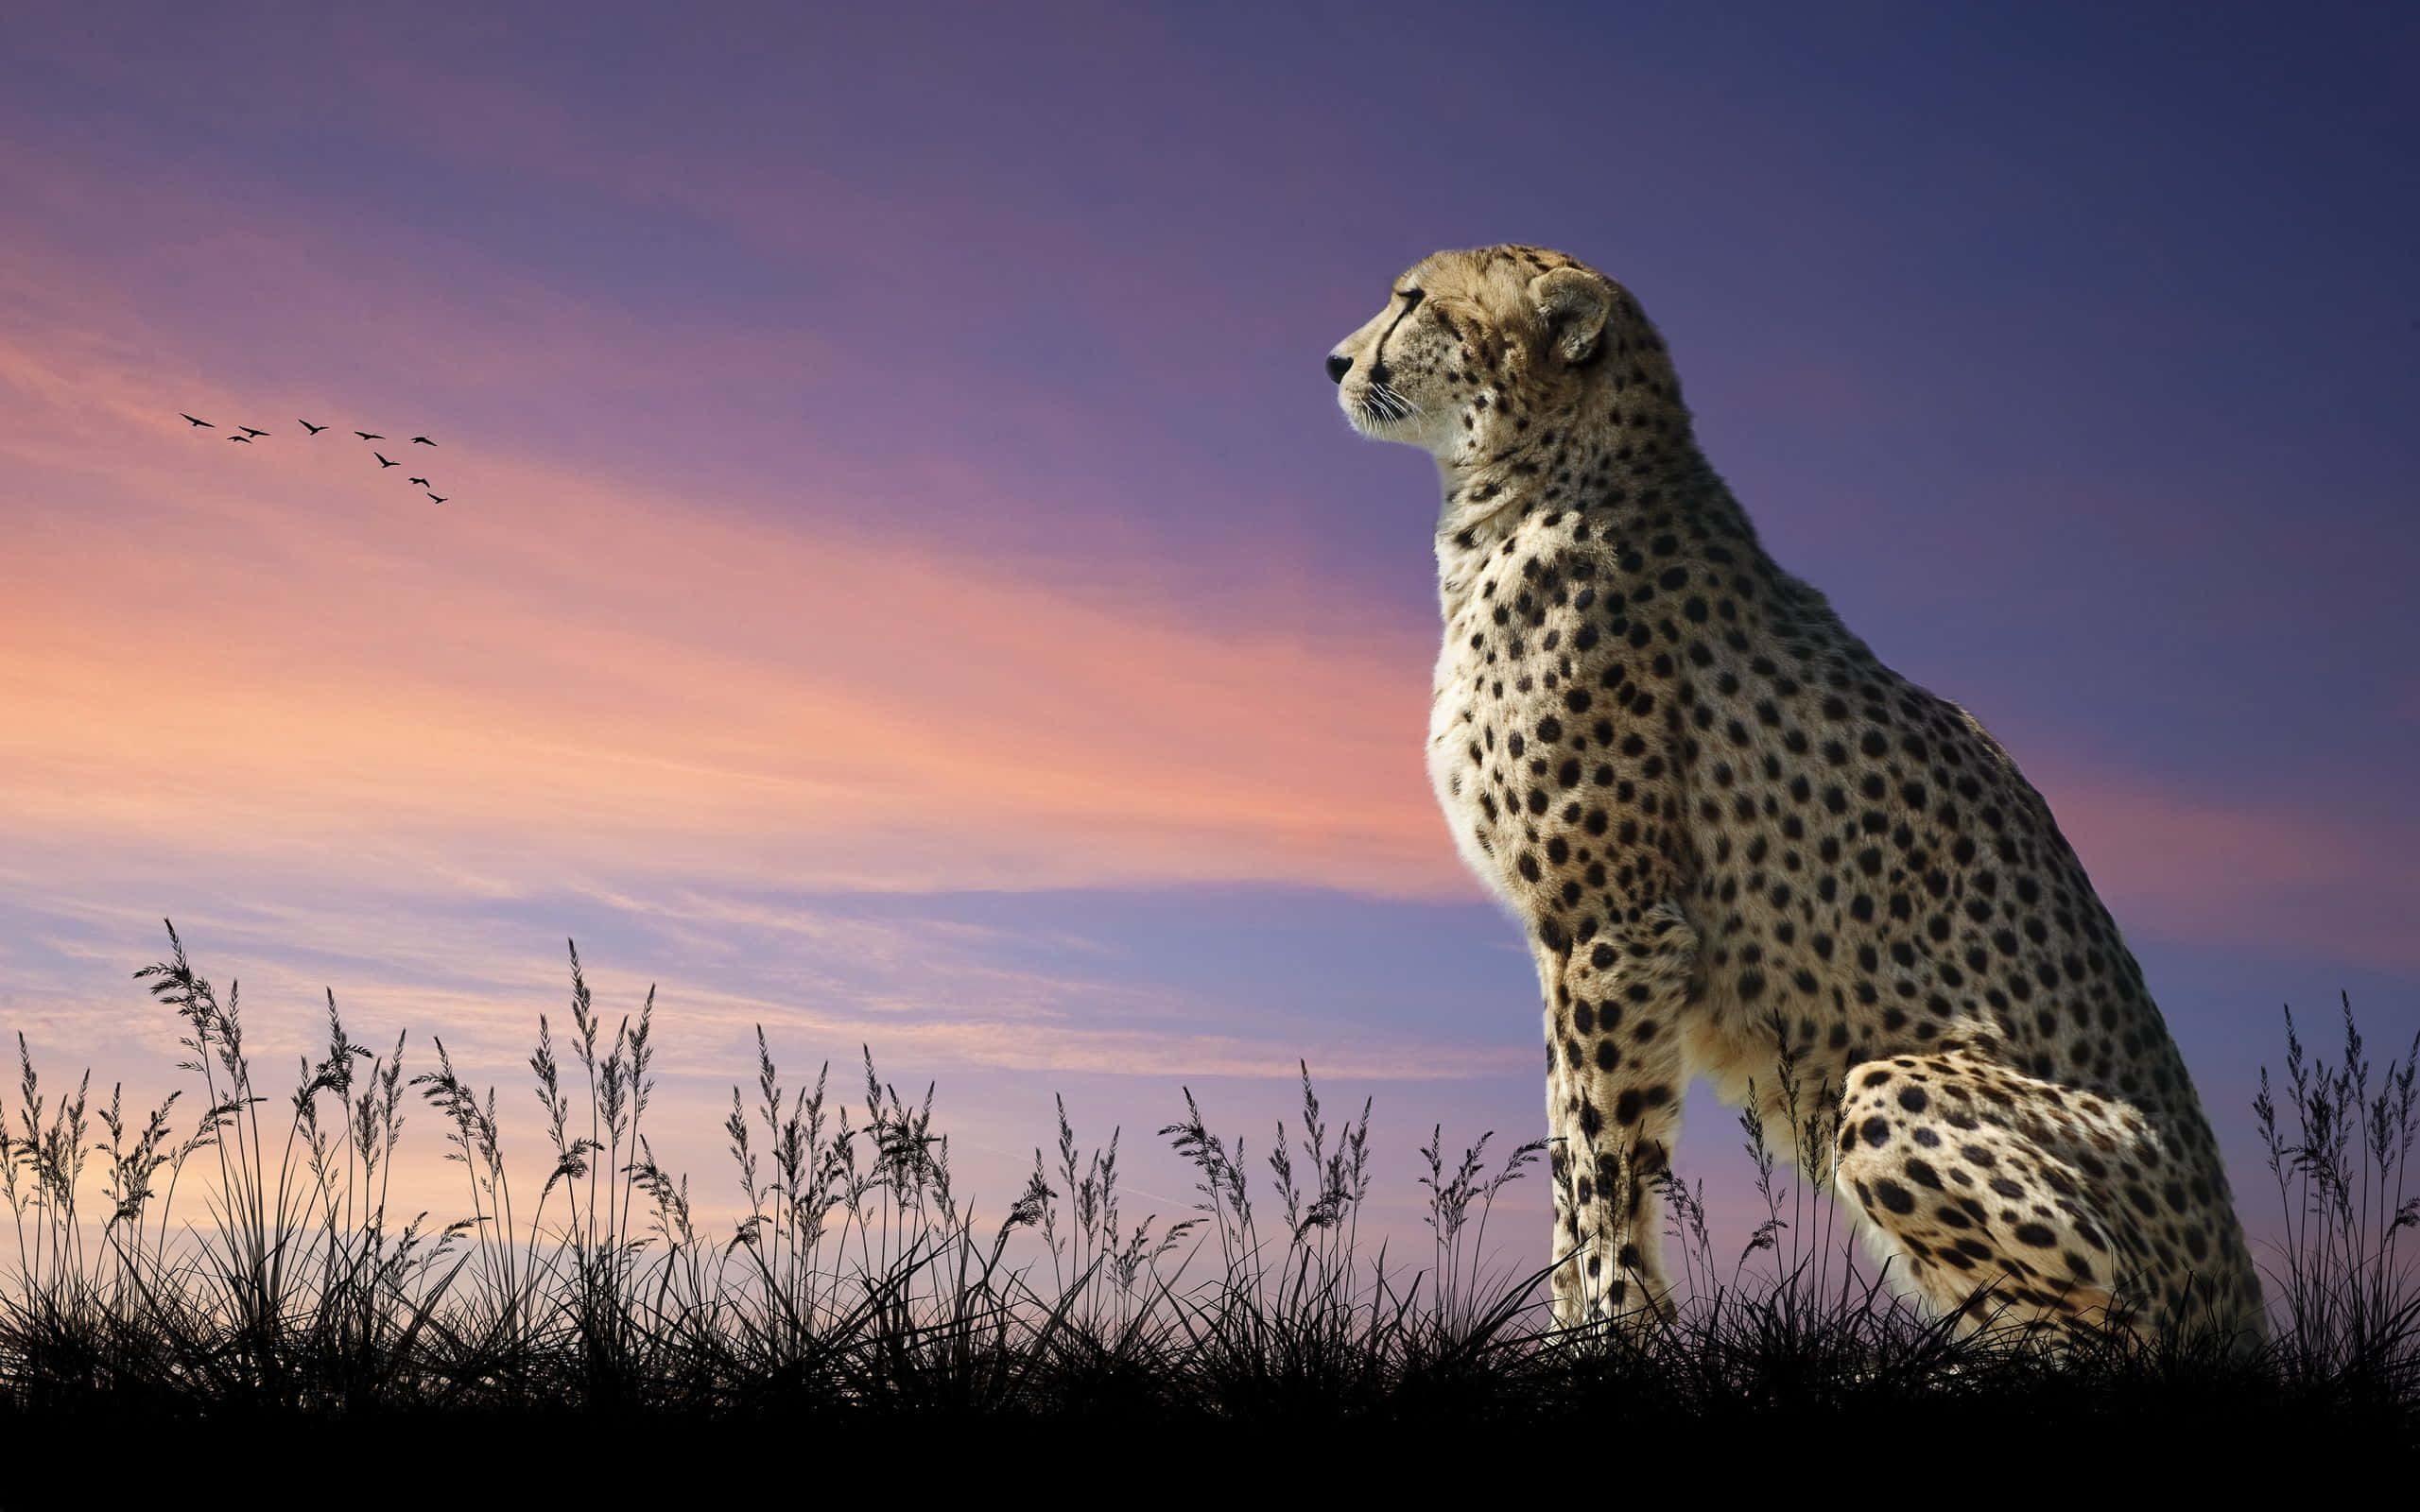 Cheetah on the Savannah